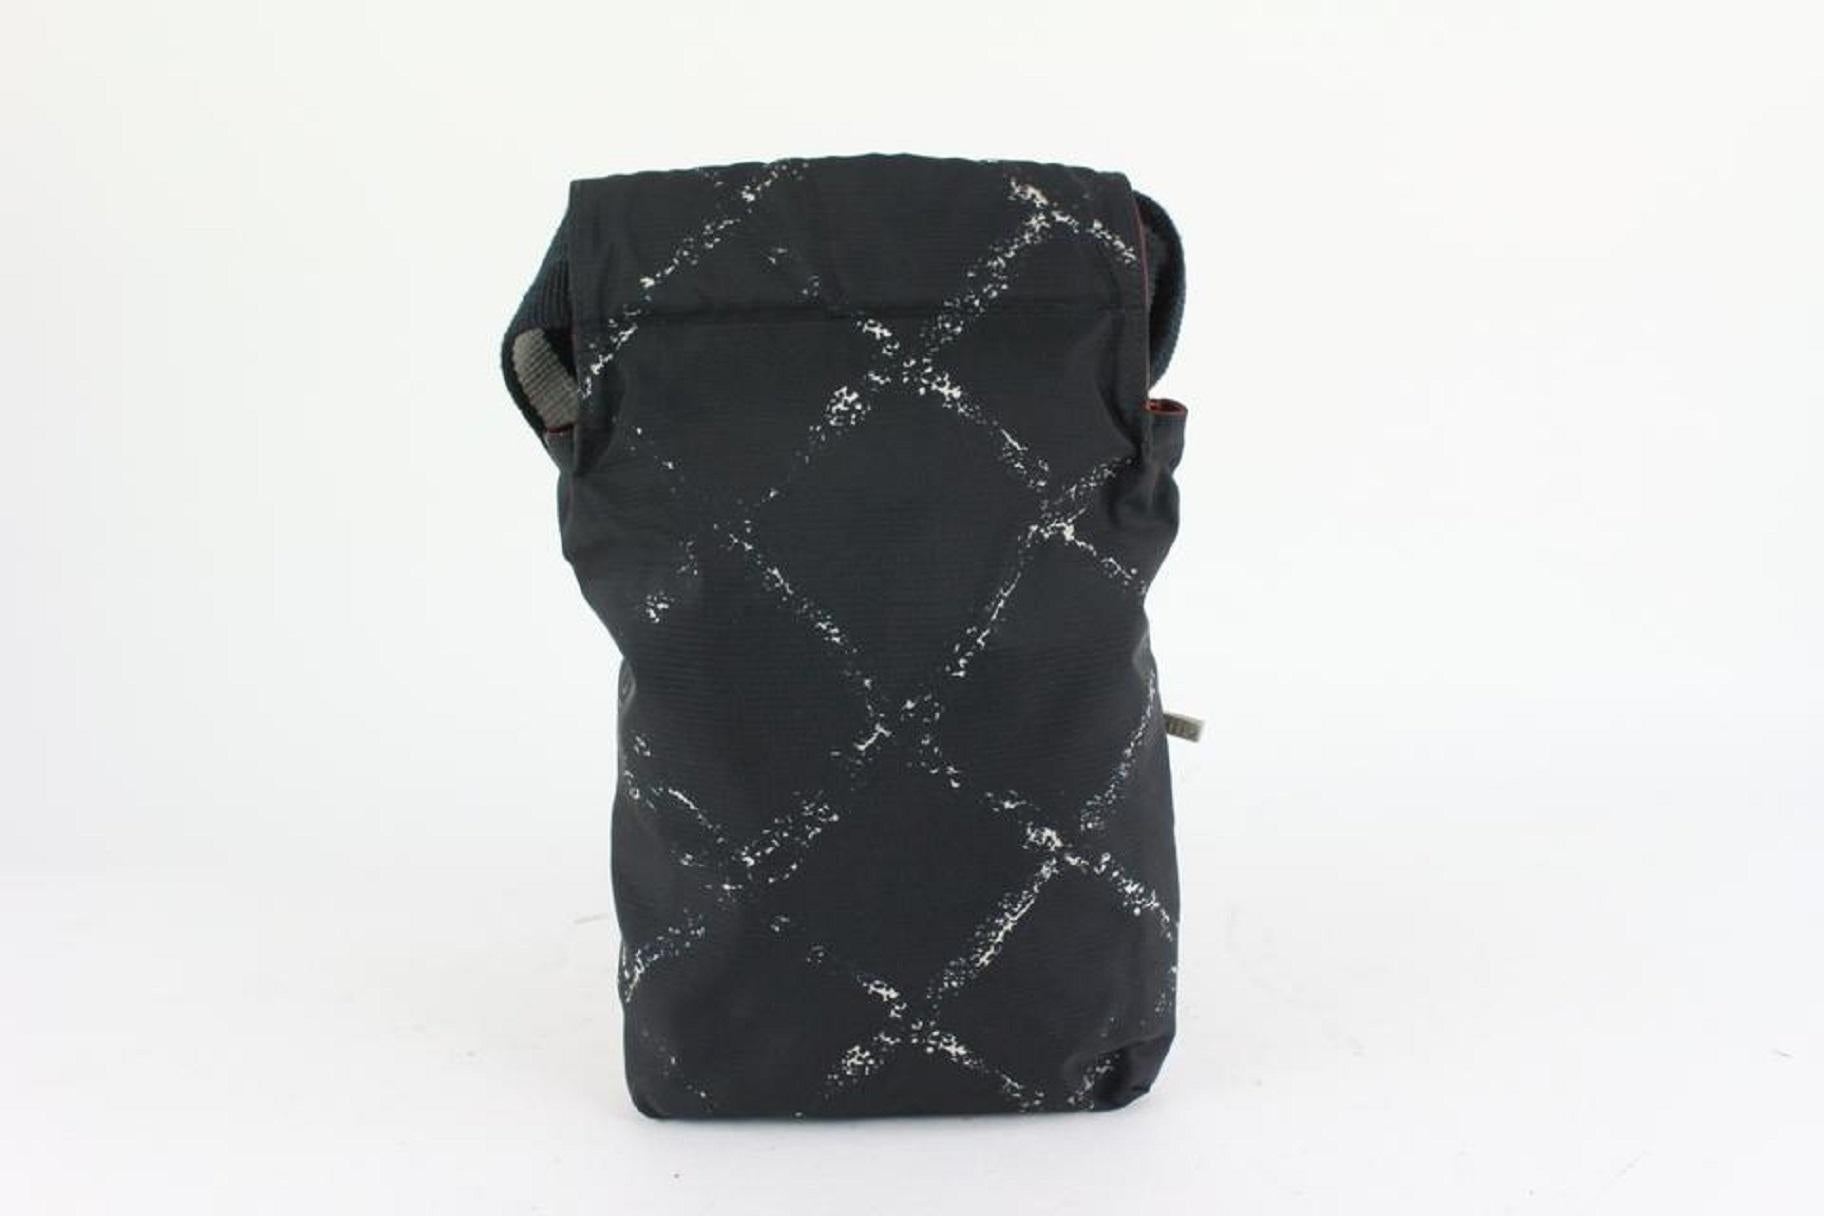 Chanel Black New Lin Belt Bag Fanny Pack Waist Pouch 923ca5 2